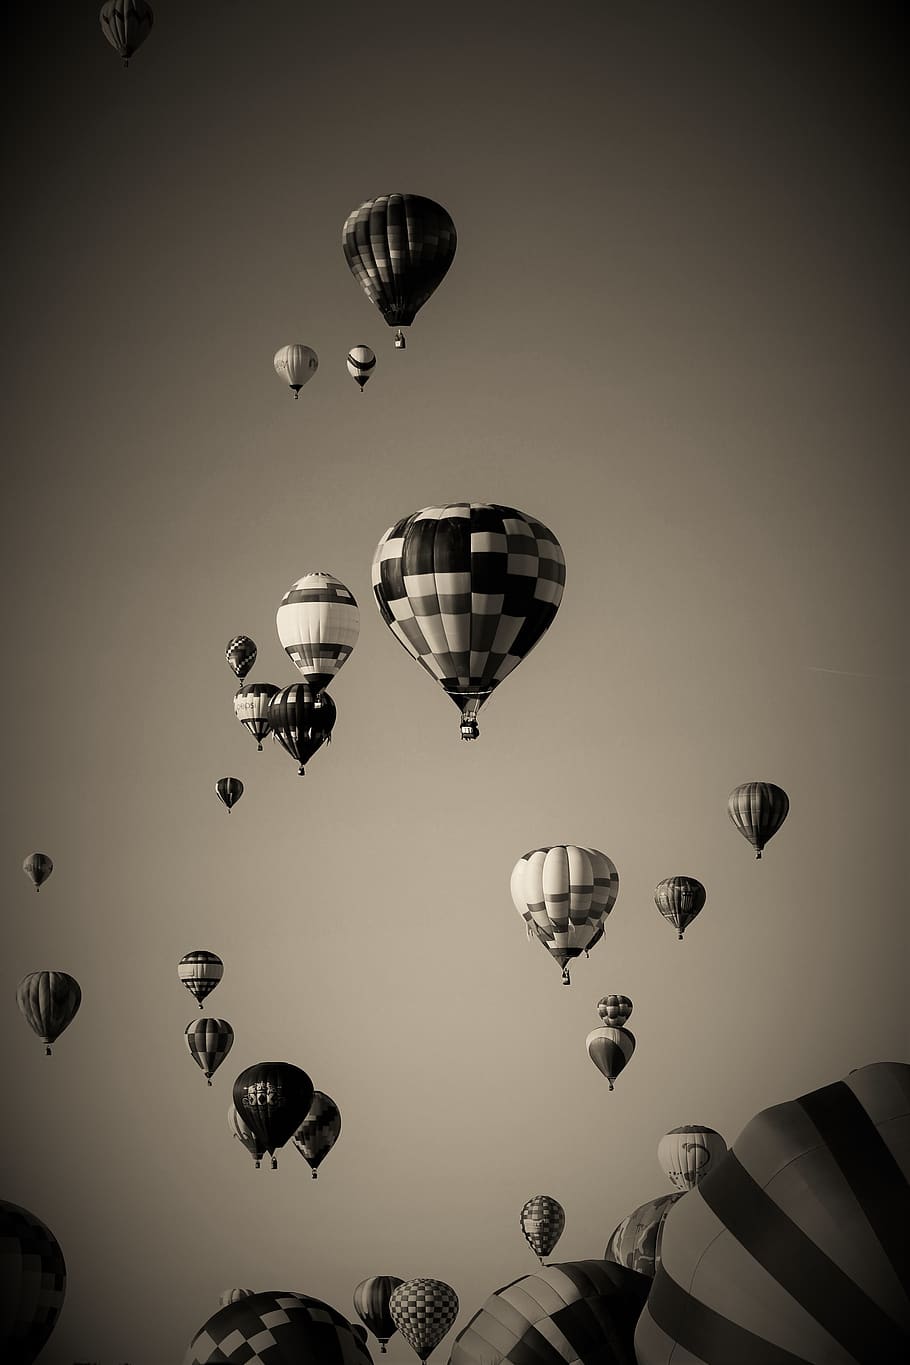 Flying Hot Air Balloons, activity, adventure, aerial, airship